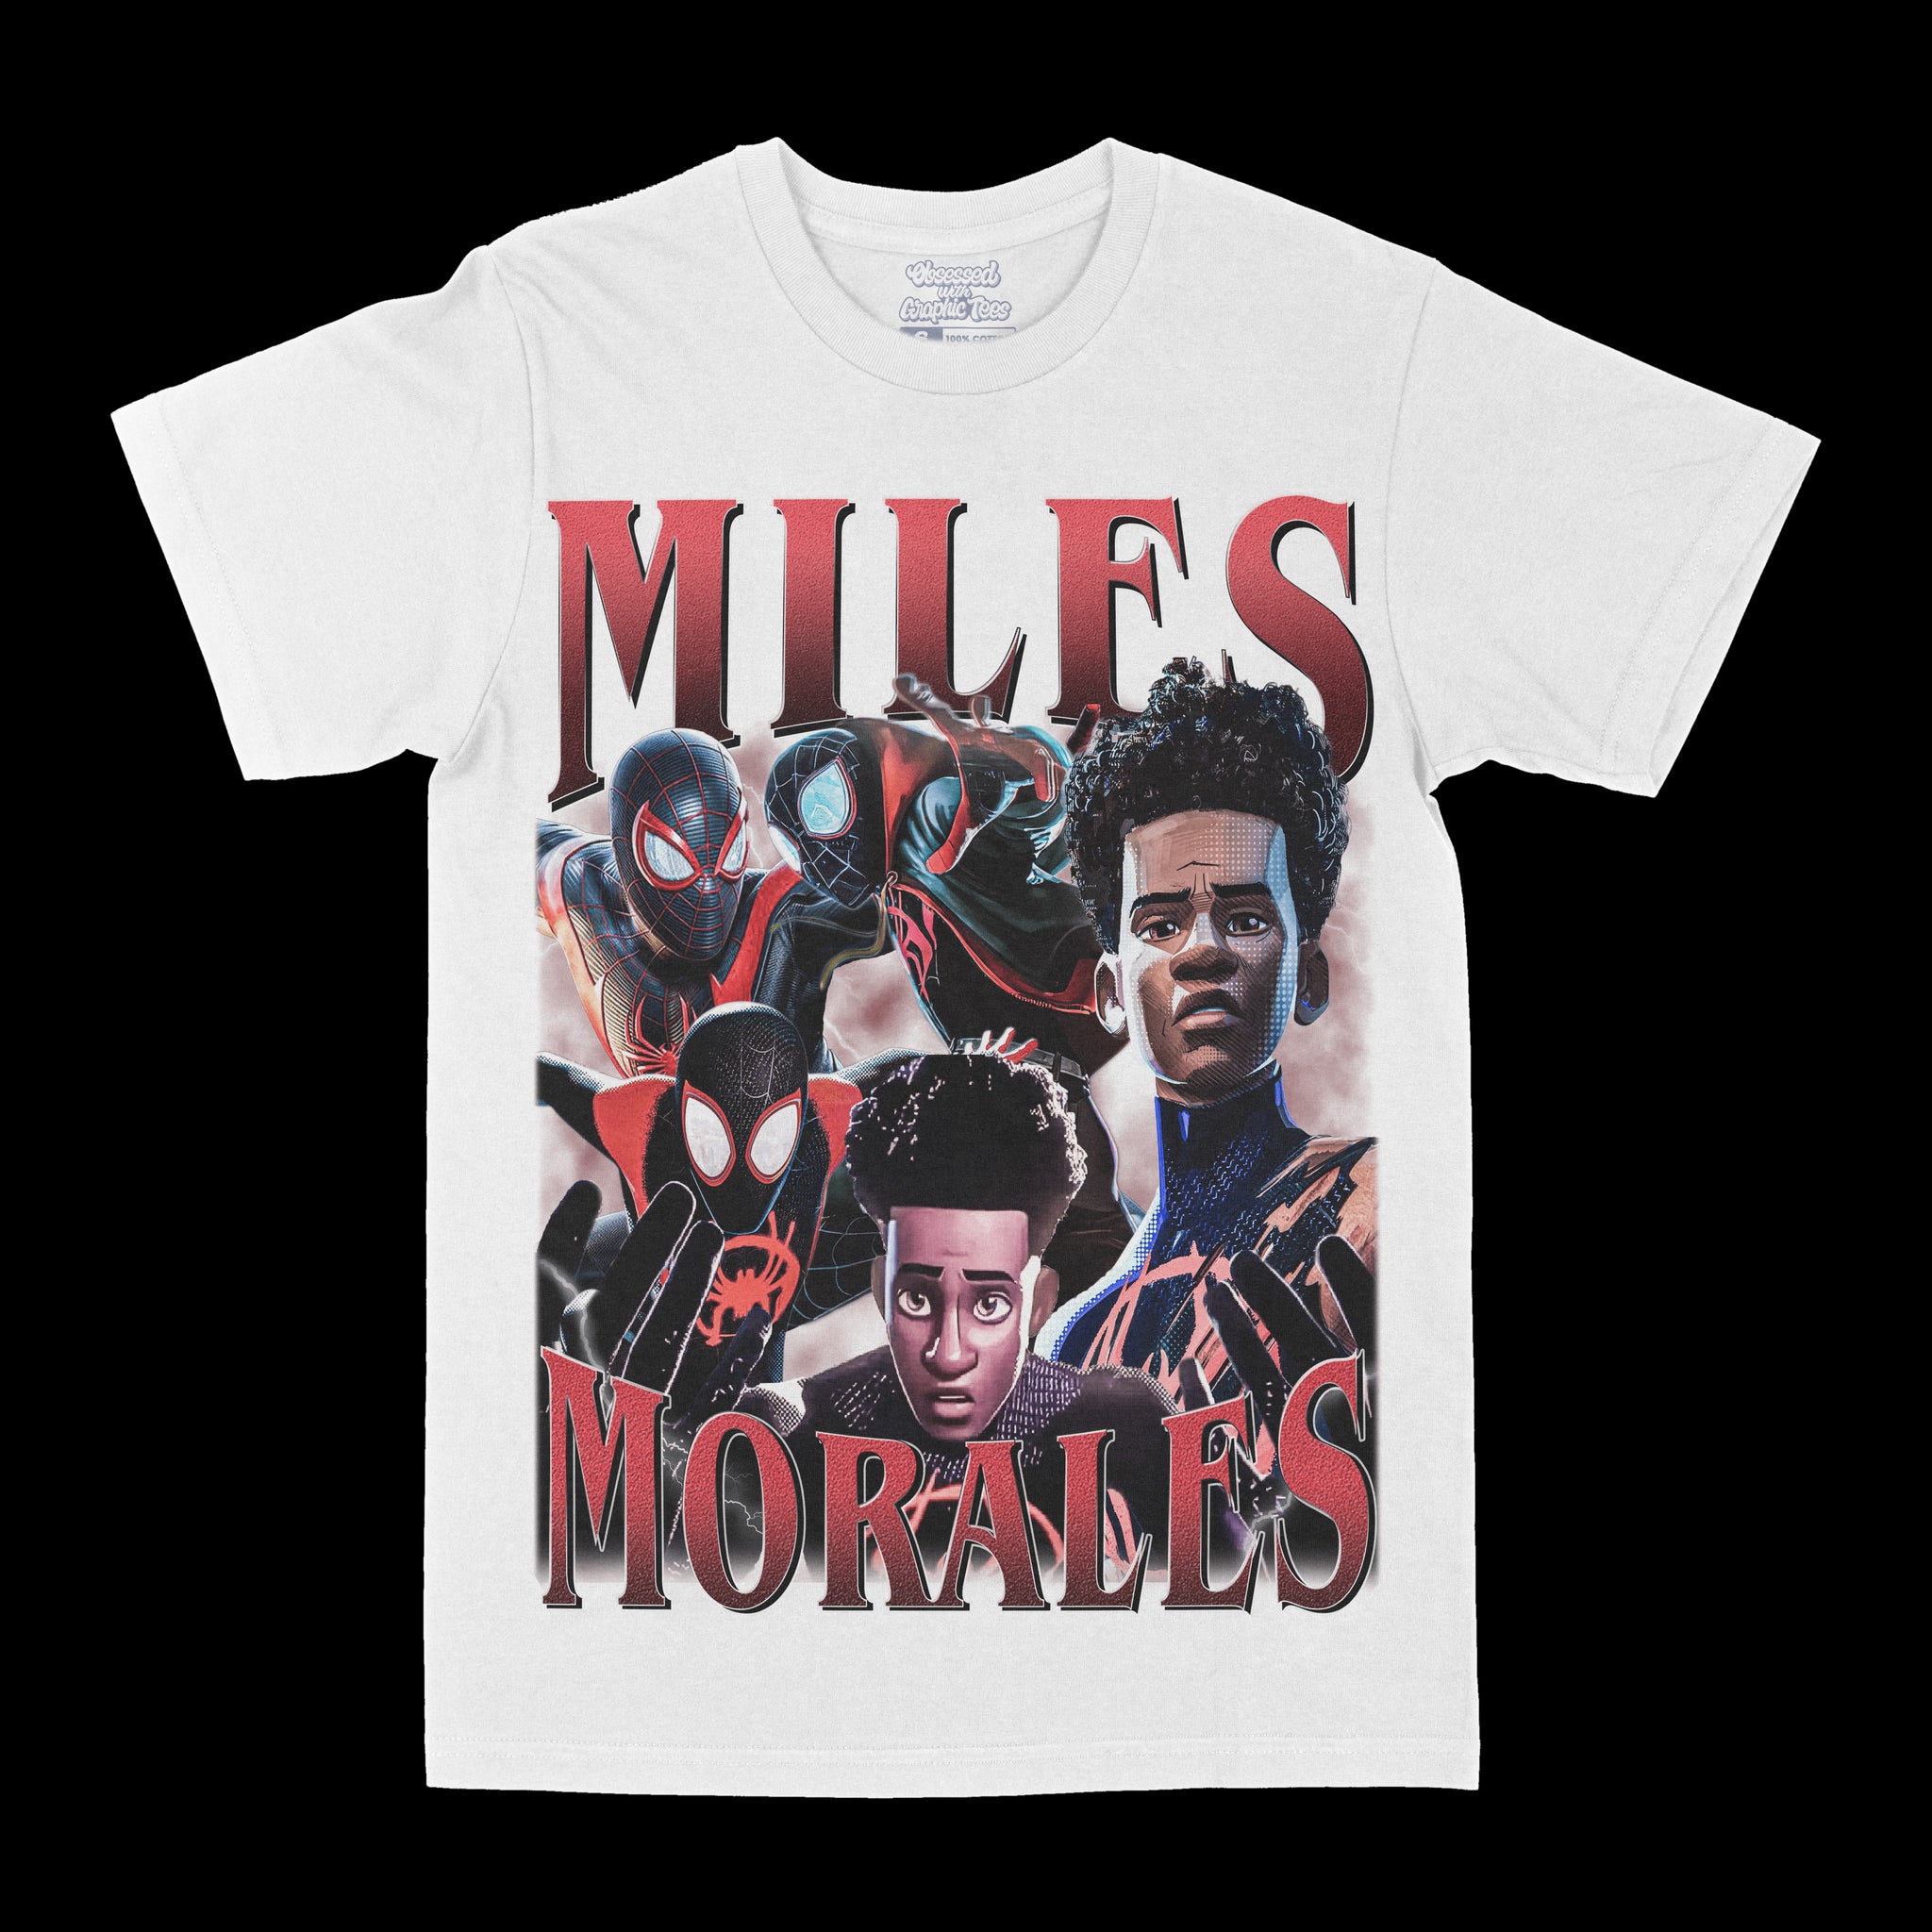 Miles Morales "Spiderman" Graphic Tee